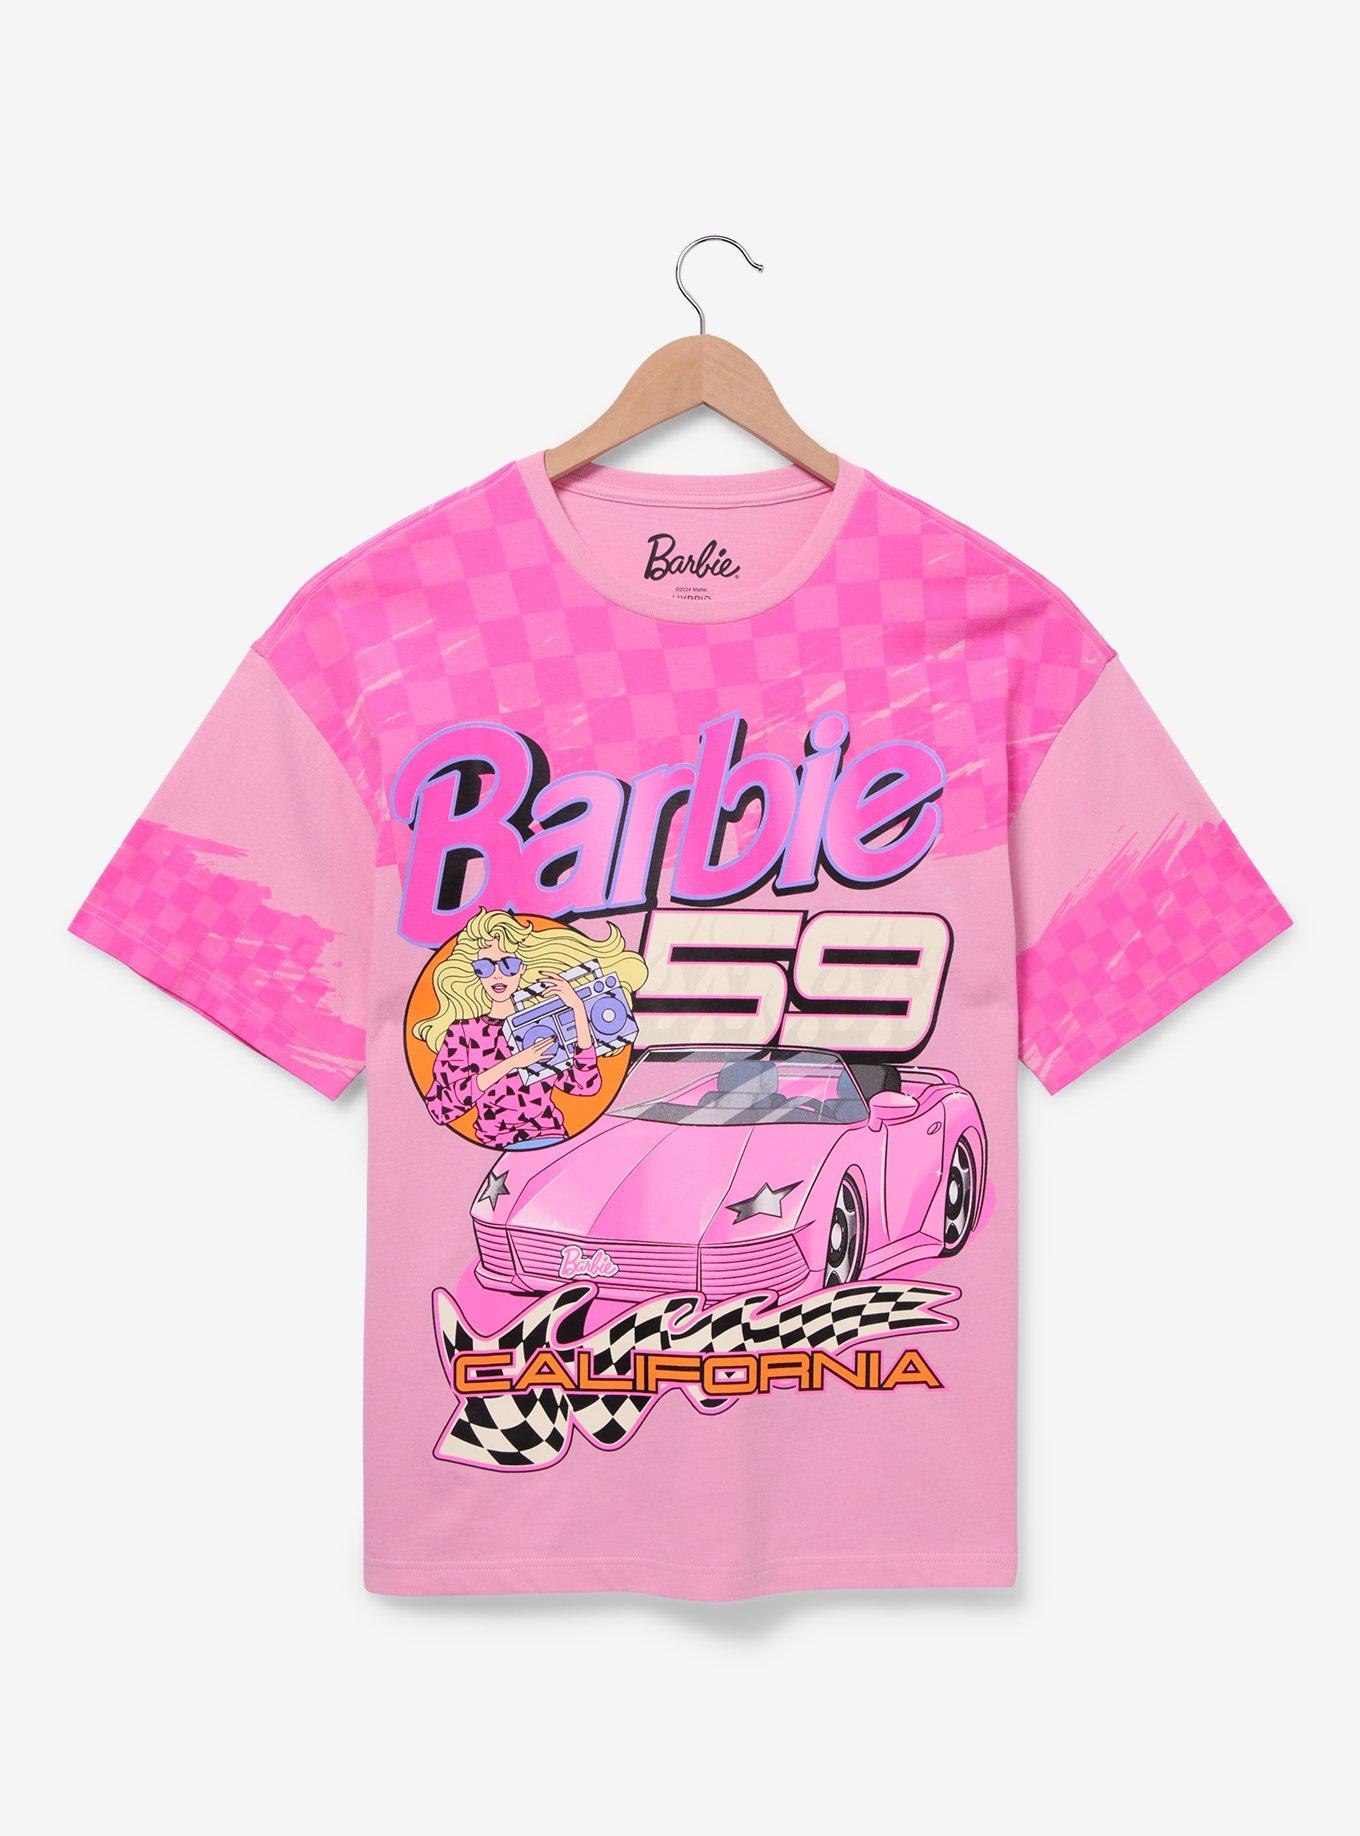 Womens Plus 3X Tek Gear Long Sleeve Tee shirt Top Pink NWT $30